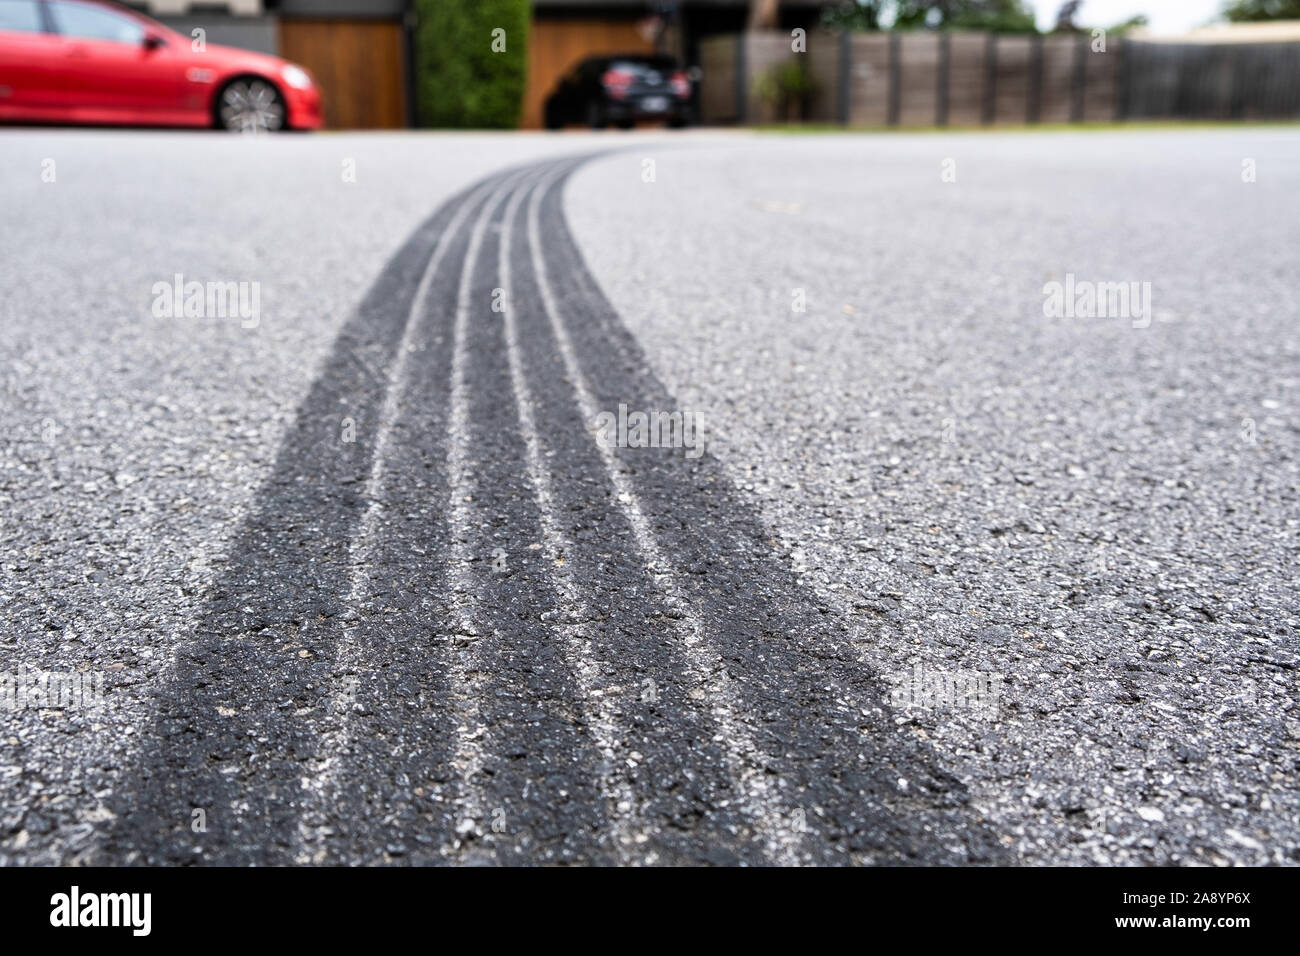 Tire track mark on asphalt made by hard vehicle braking Stock Photo